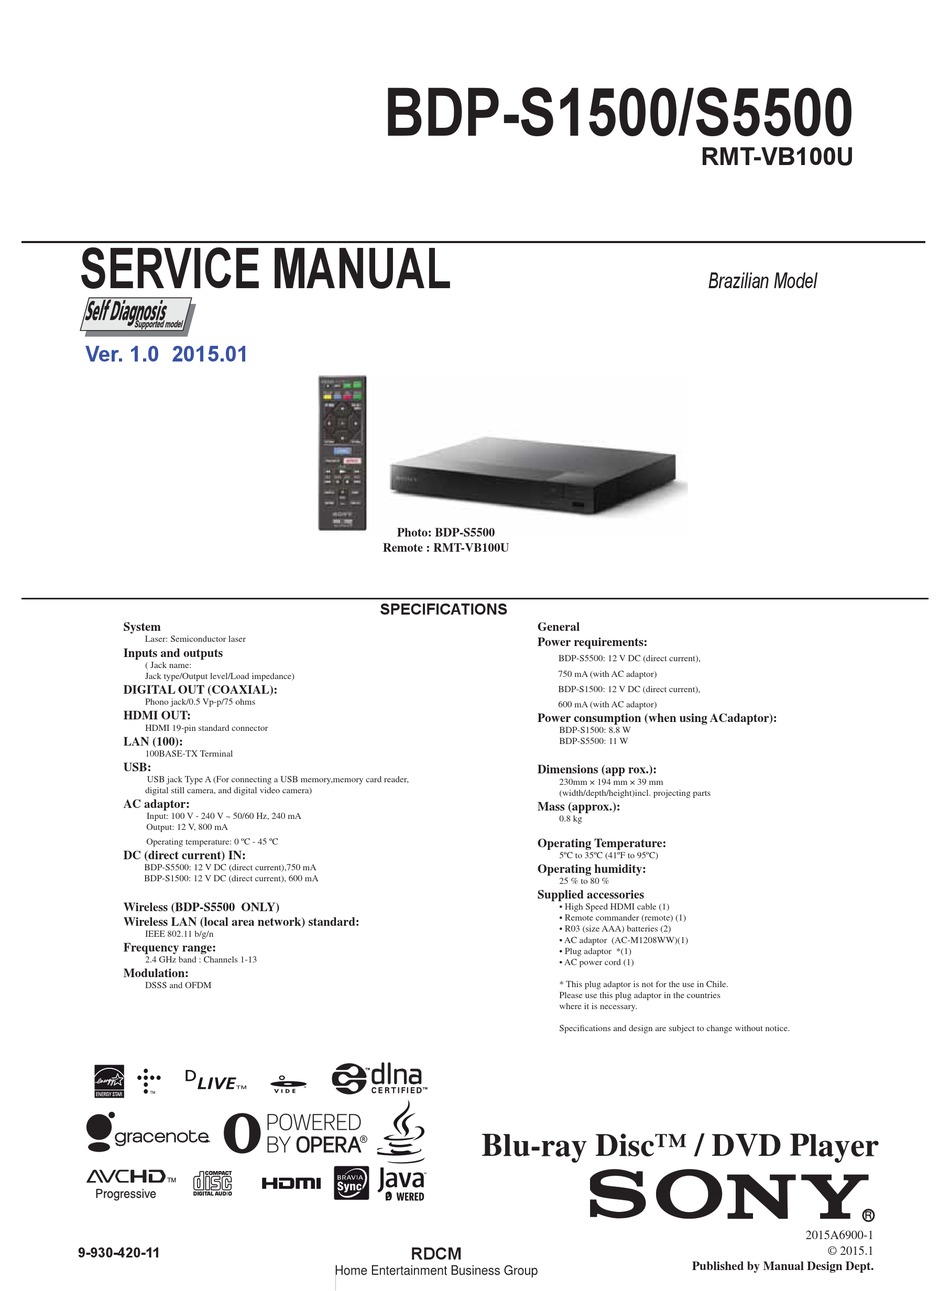 SONY BDP-S1500 SERVICE MANUAL Pdf Download | ManualsLib